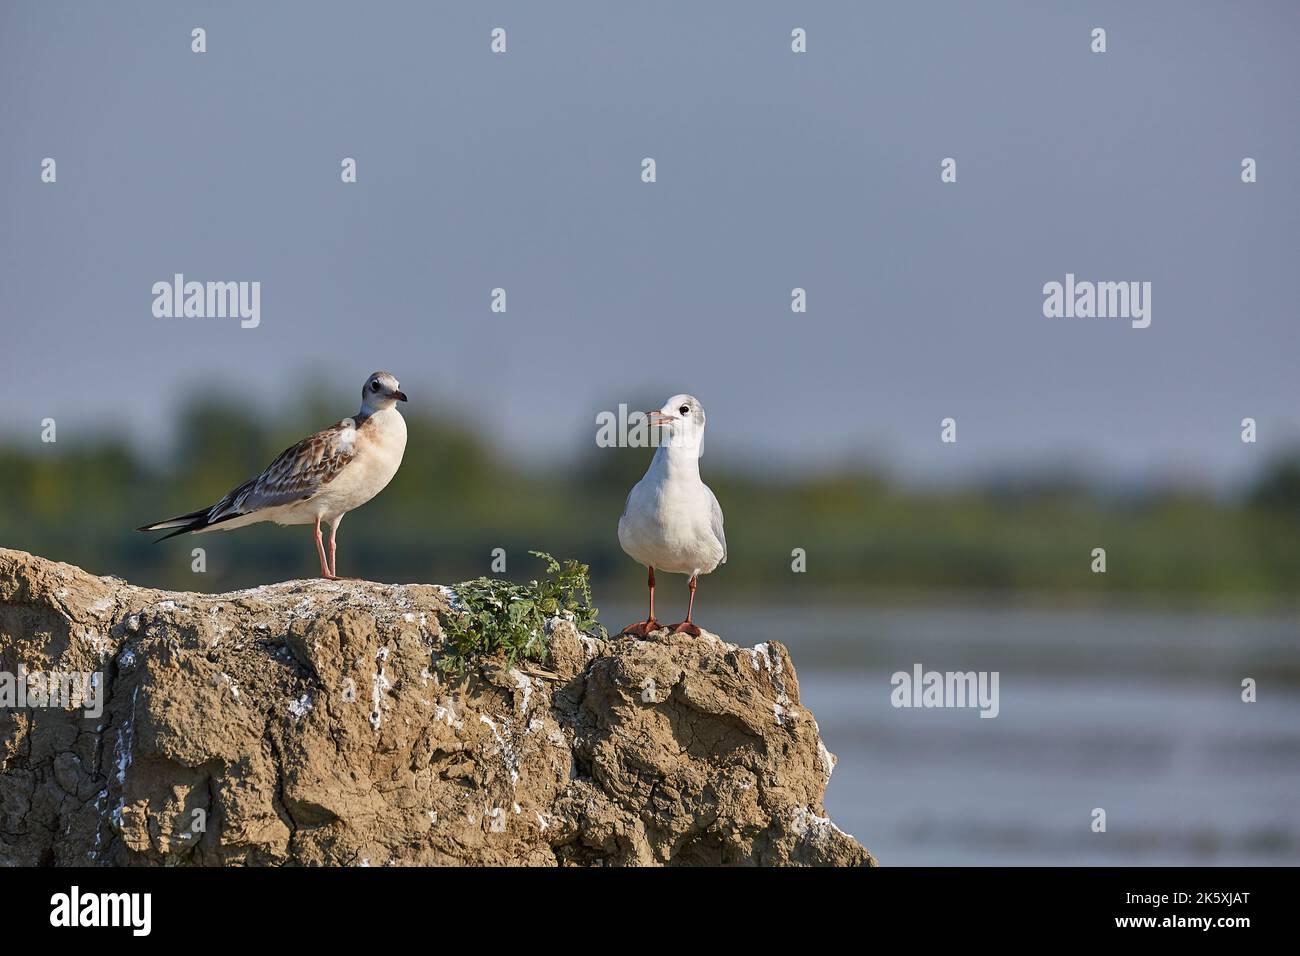 Seagulls on a small island in a lkae Stock Photo